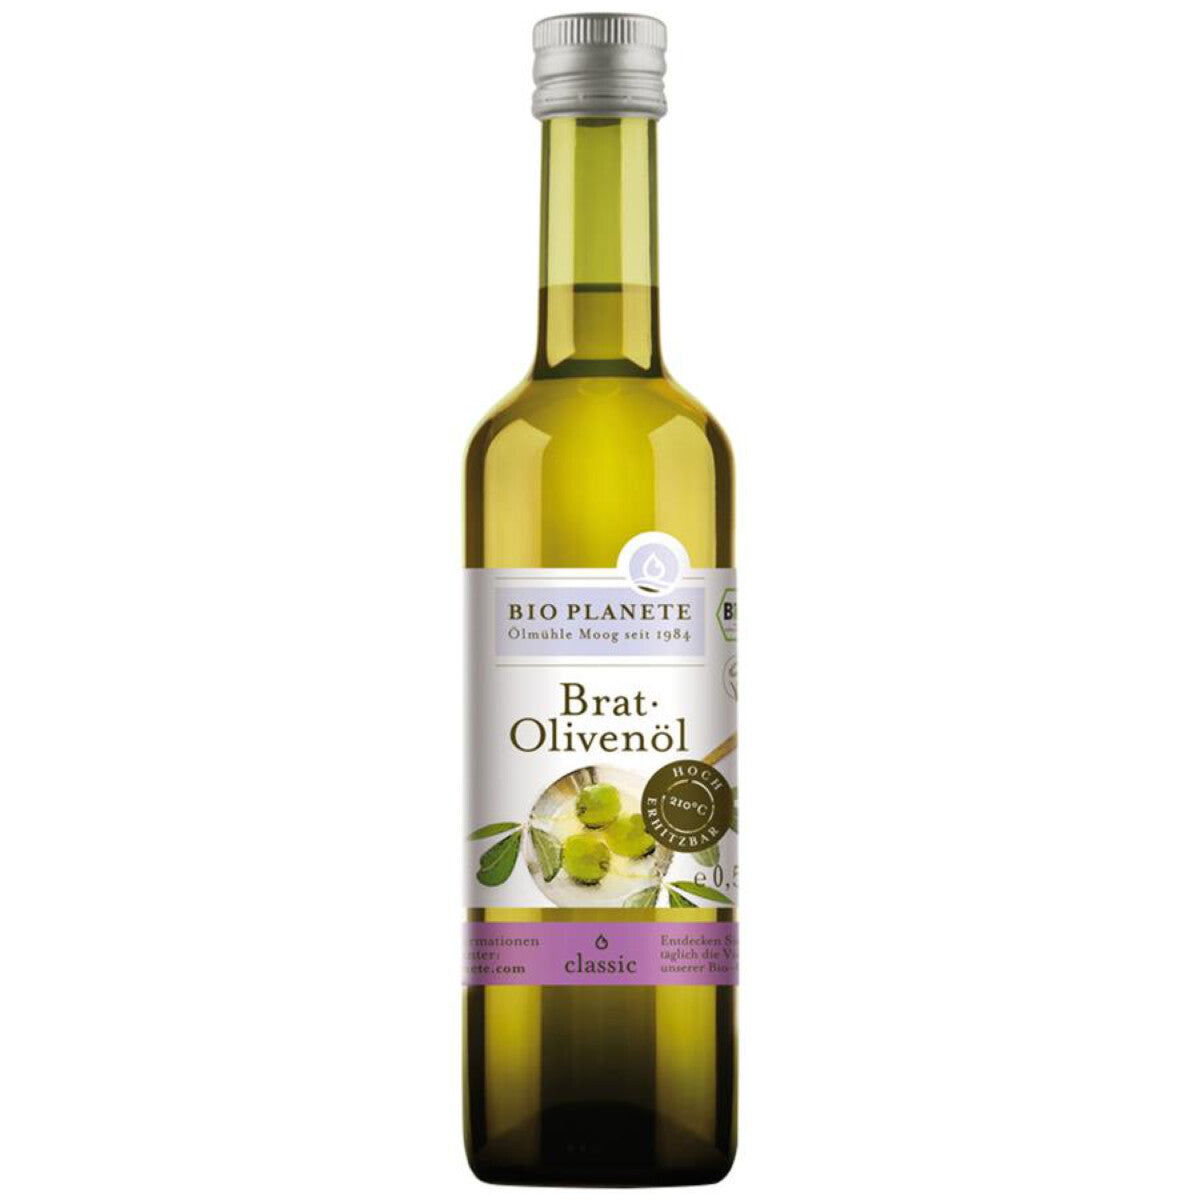 BIO PLANETE CLASSIC Brat-Olivenöl - 0,5 l